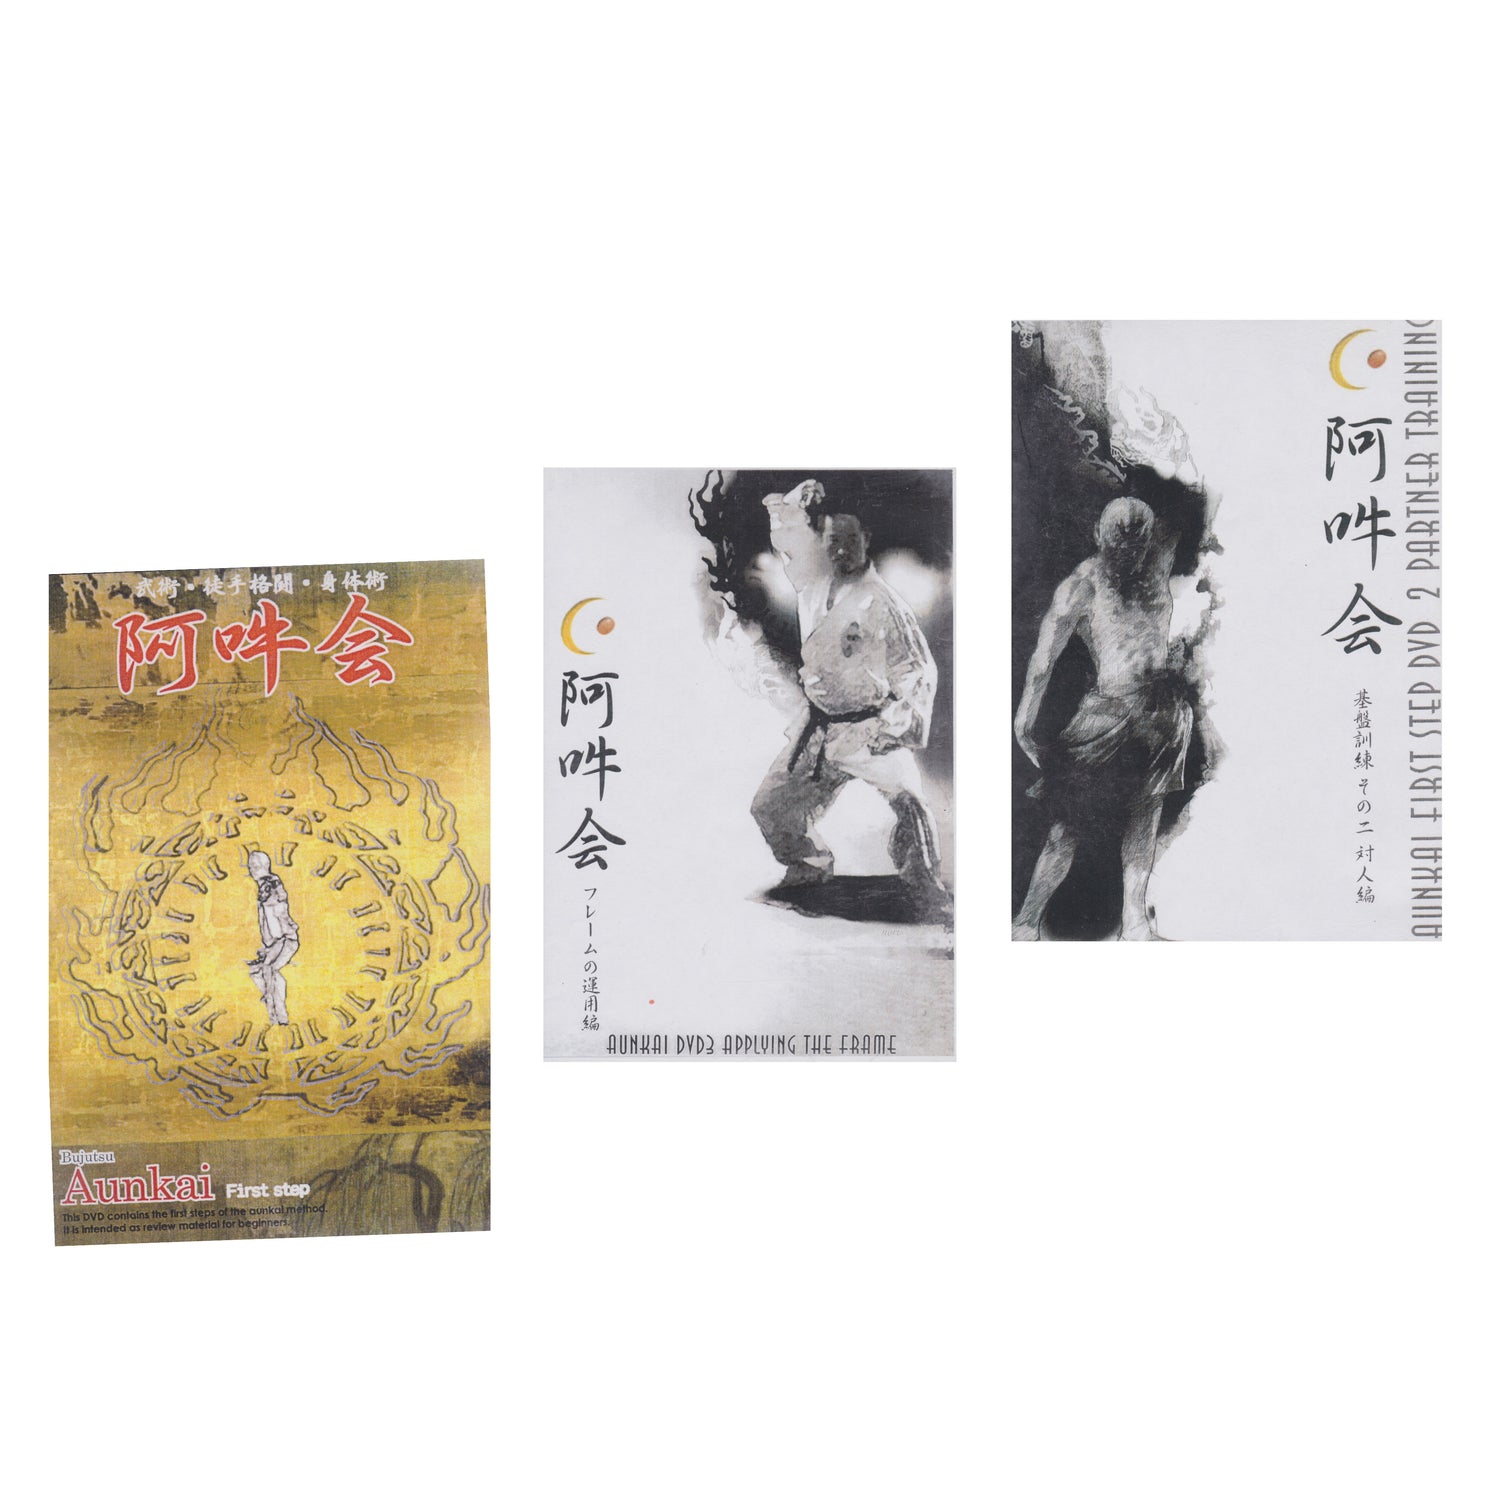 Aunkai 3 DVD Set by Minoru Akuzawa (Preowned)